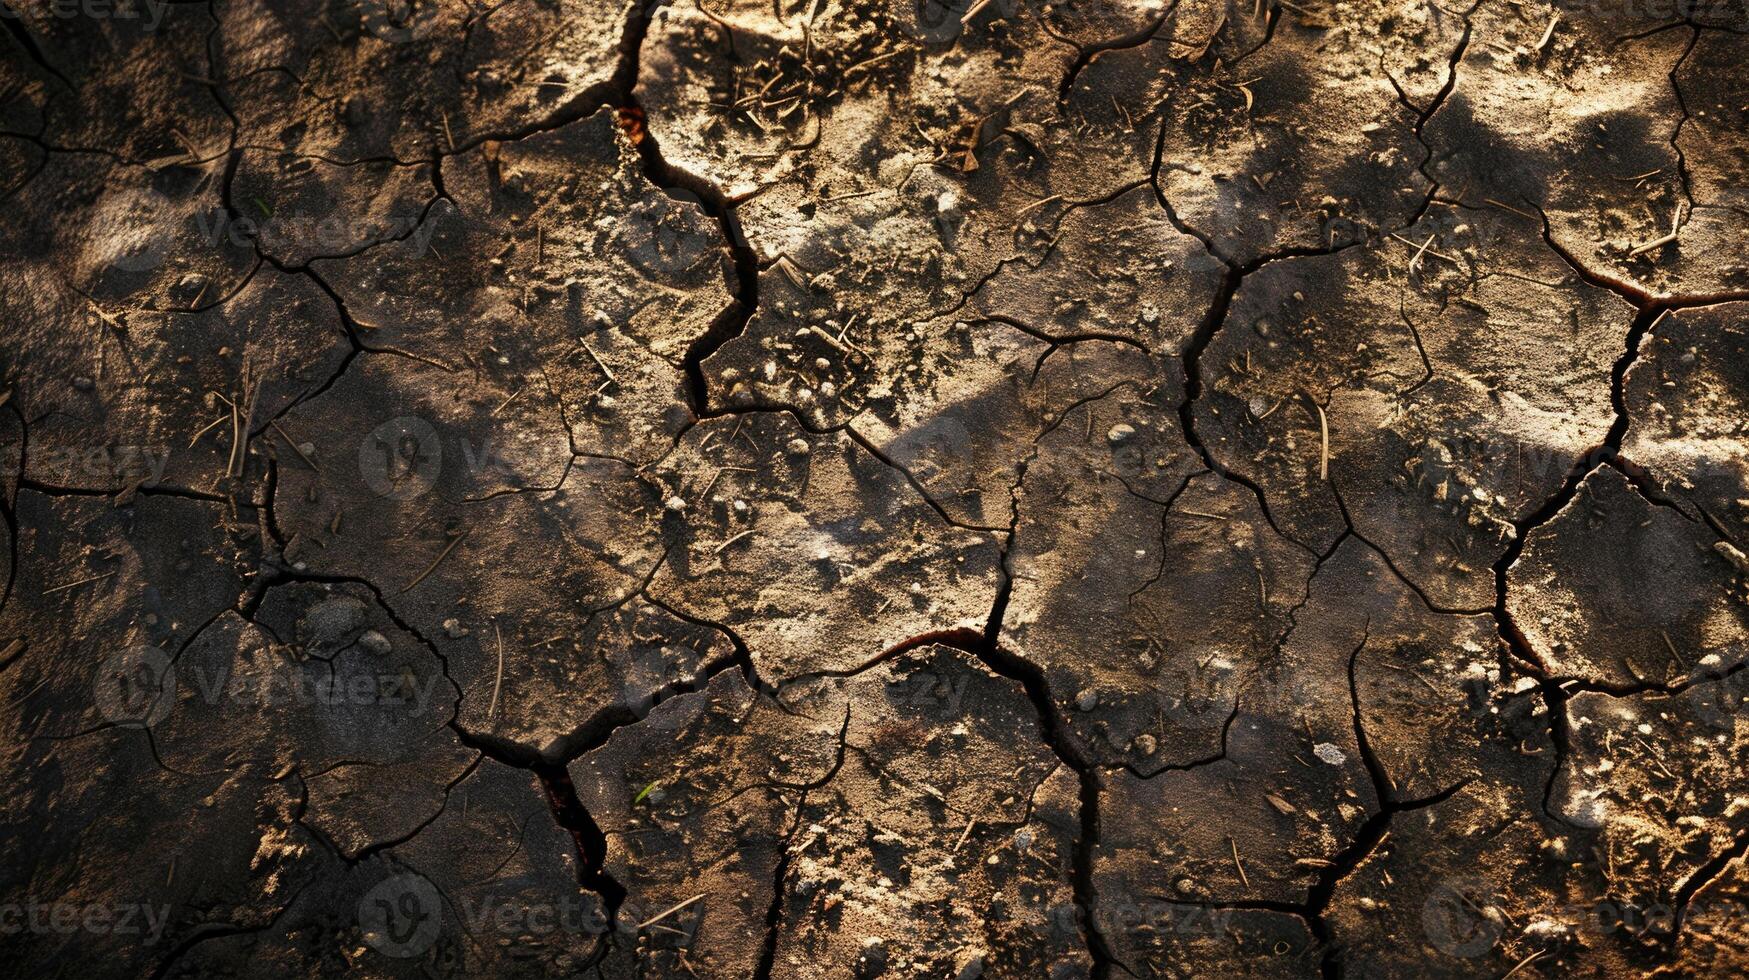 terra desatado texturizado superfície fundo debaixo brilhante luz solar fechar-se textura foto